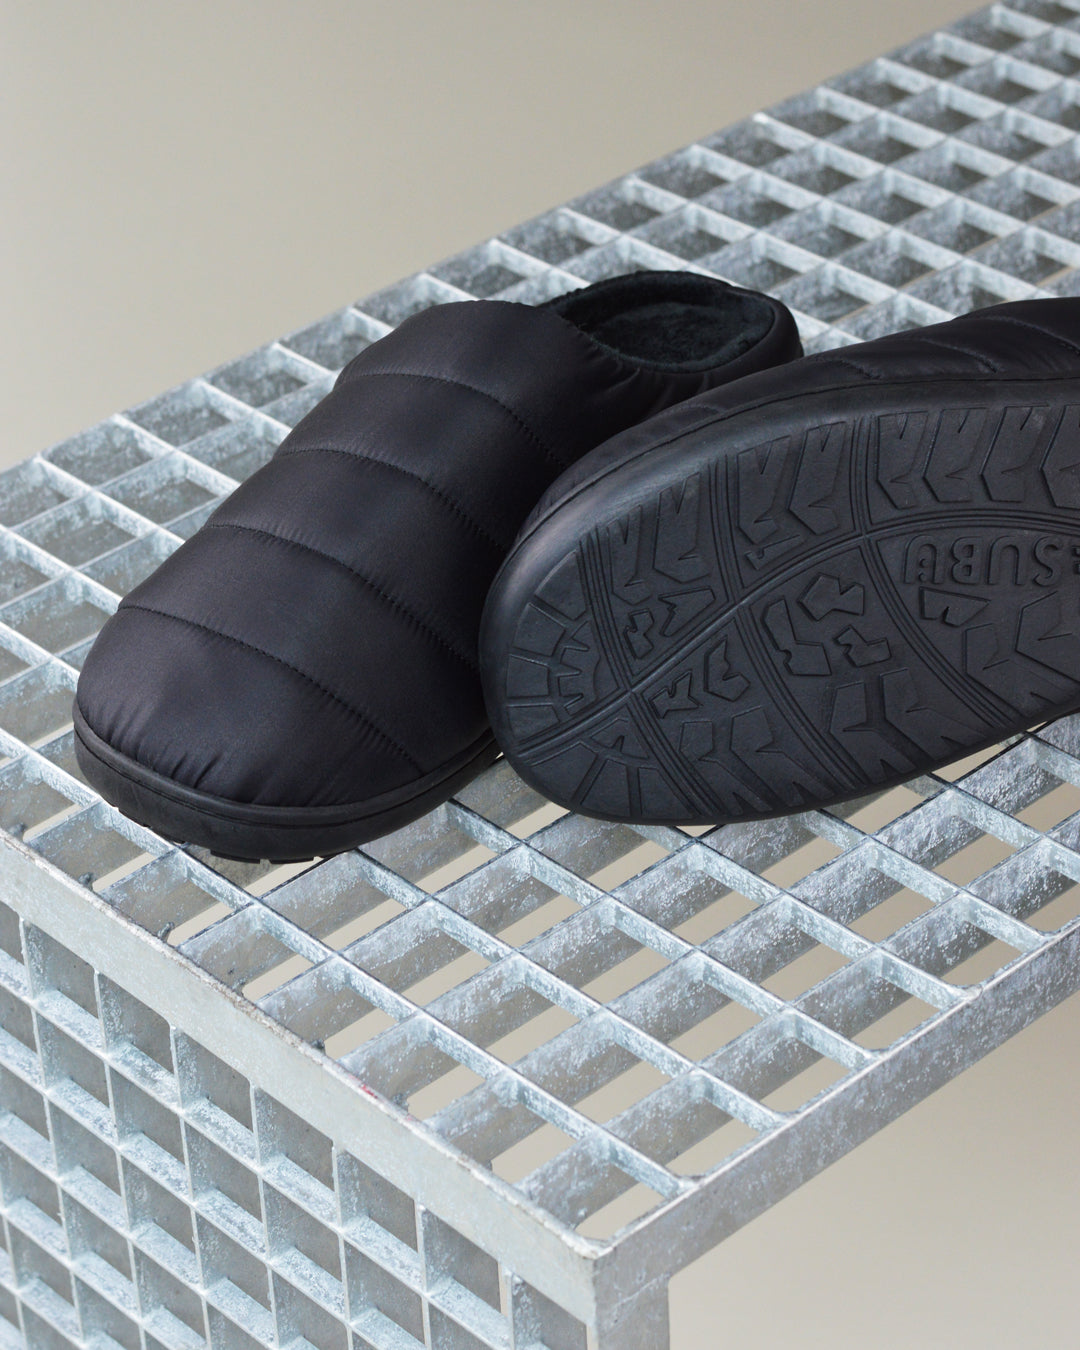 Subu "Permanent Black Outdoor Sandals"